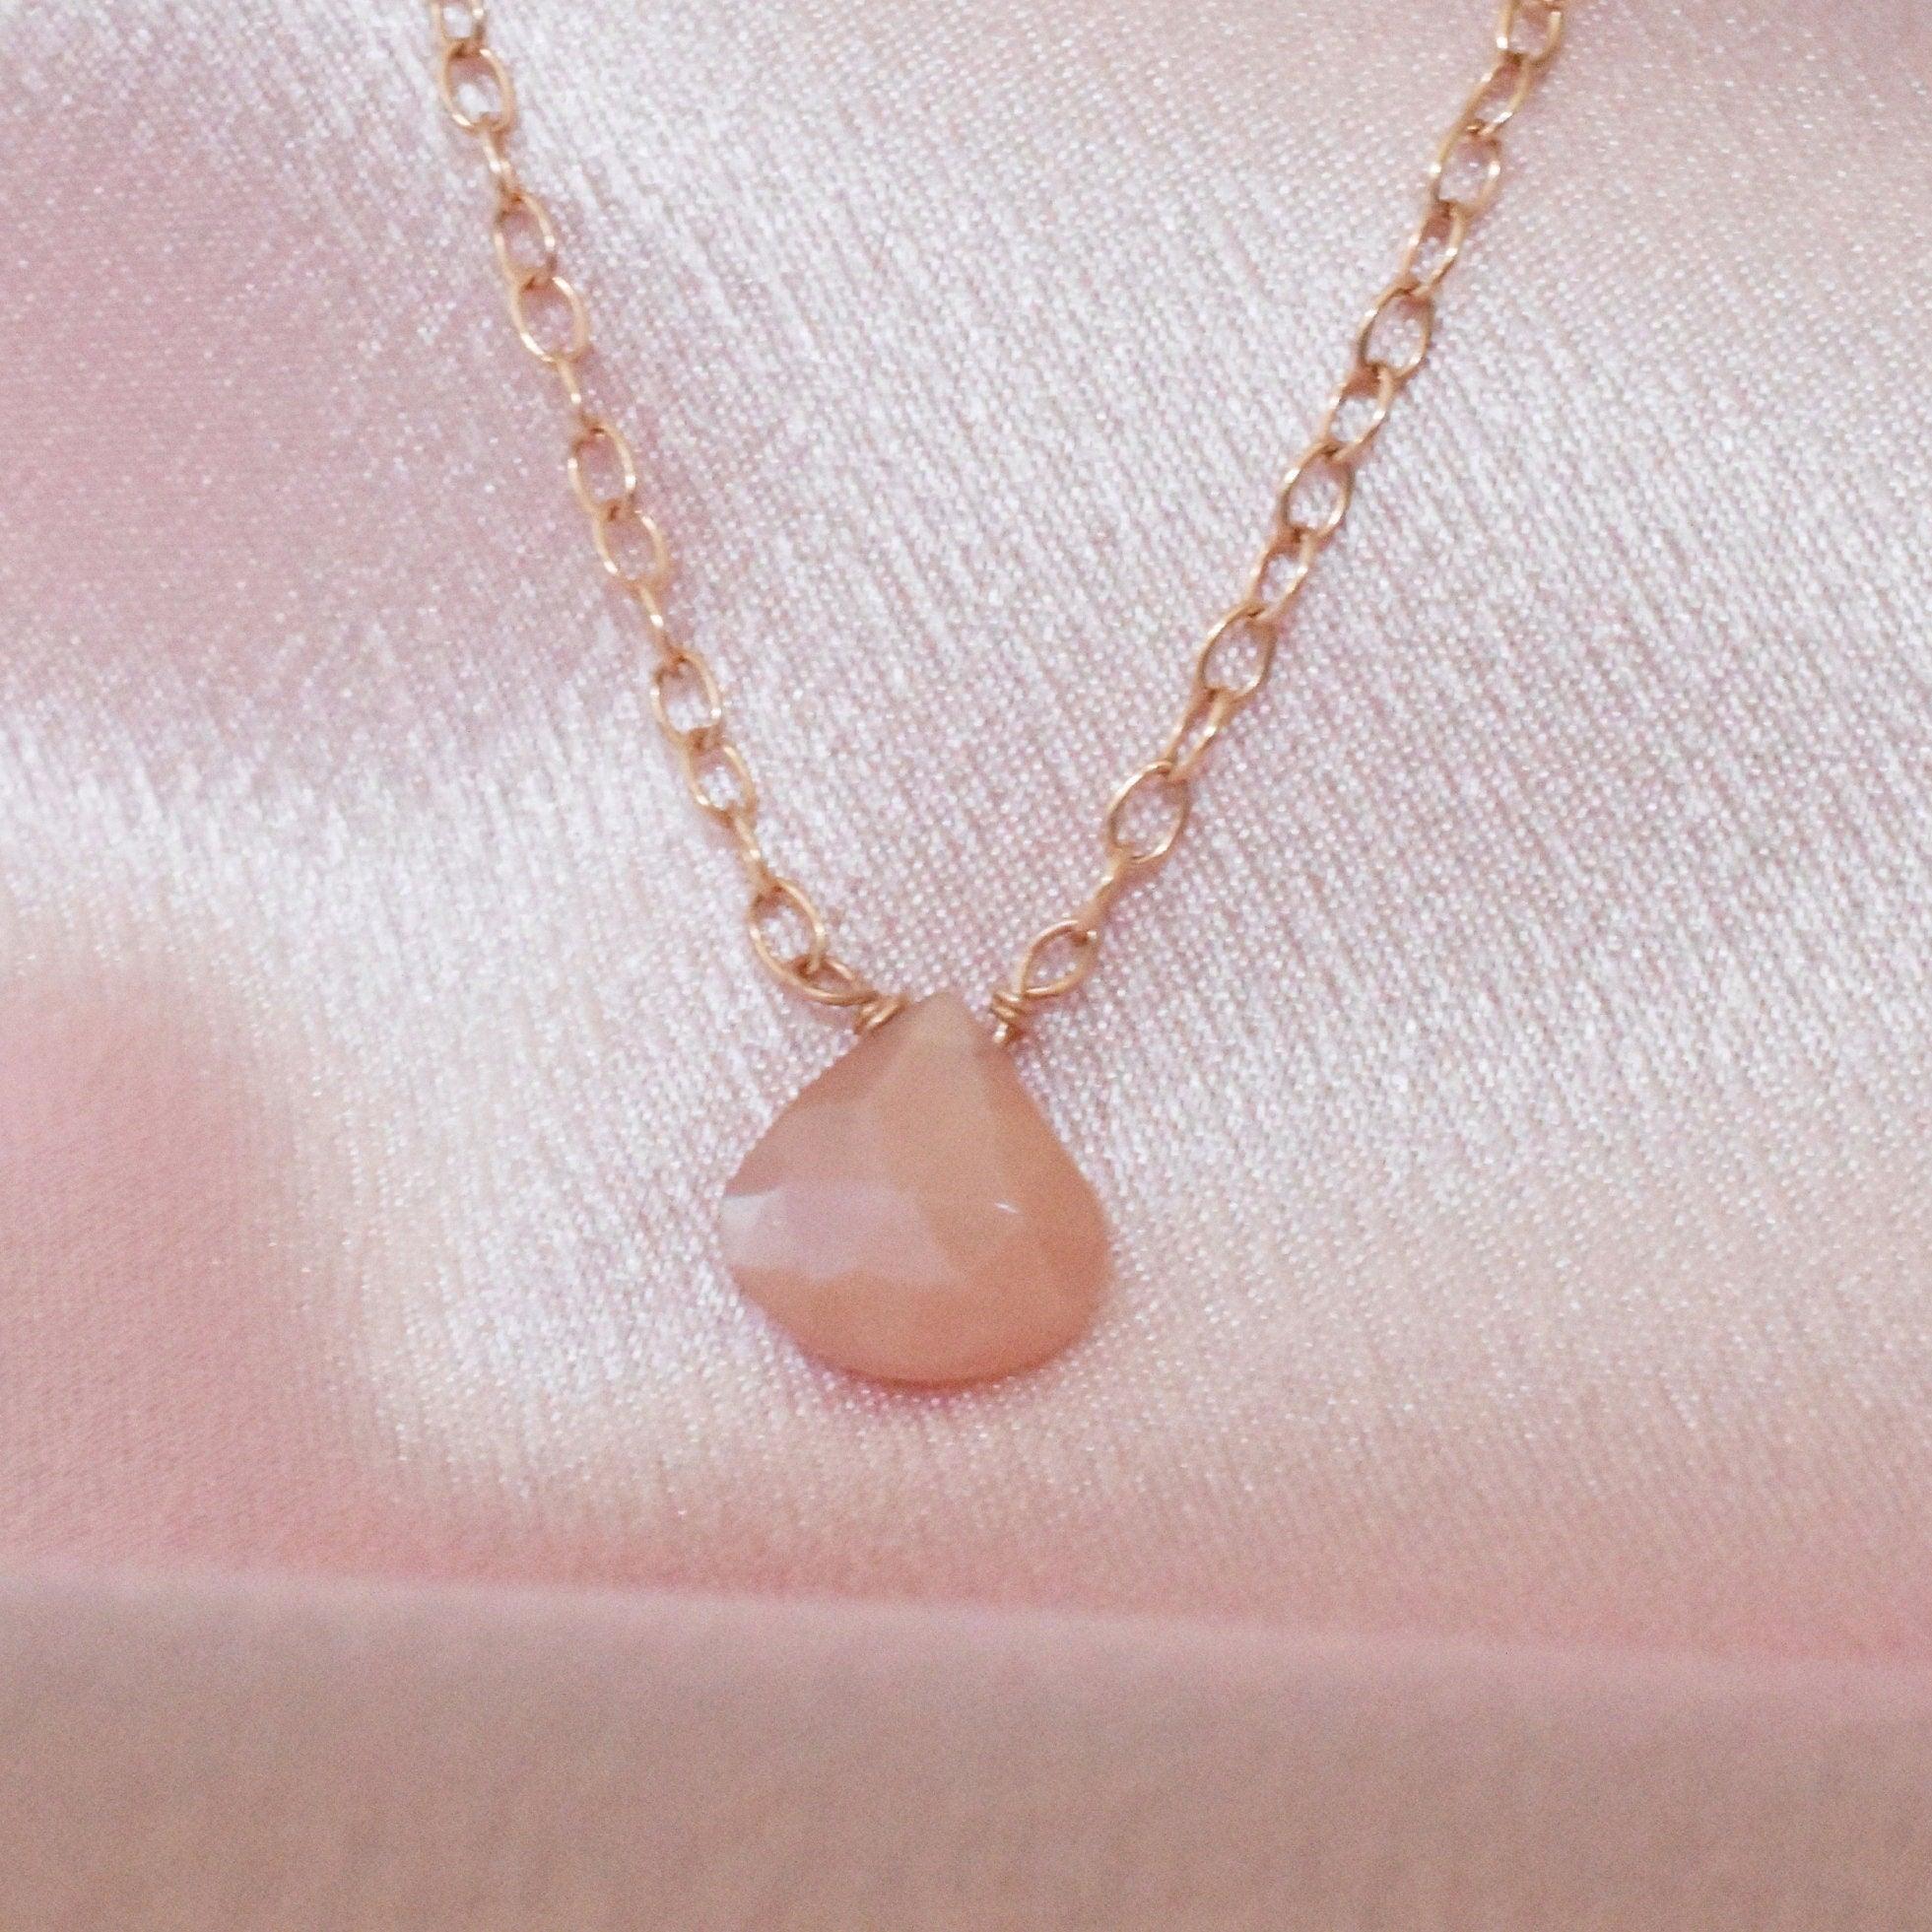 Peach Moonstone Fertility Gemstone Necklace With Reiki Infused Energy - 3Rosebudsco.com